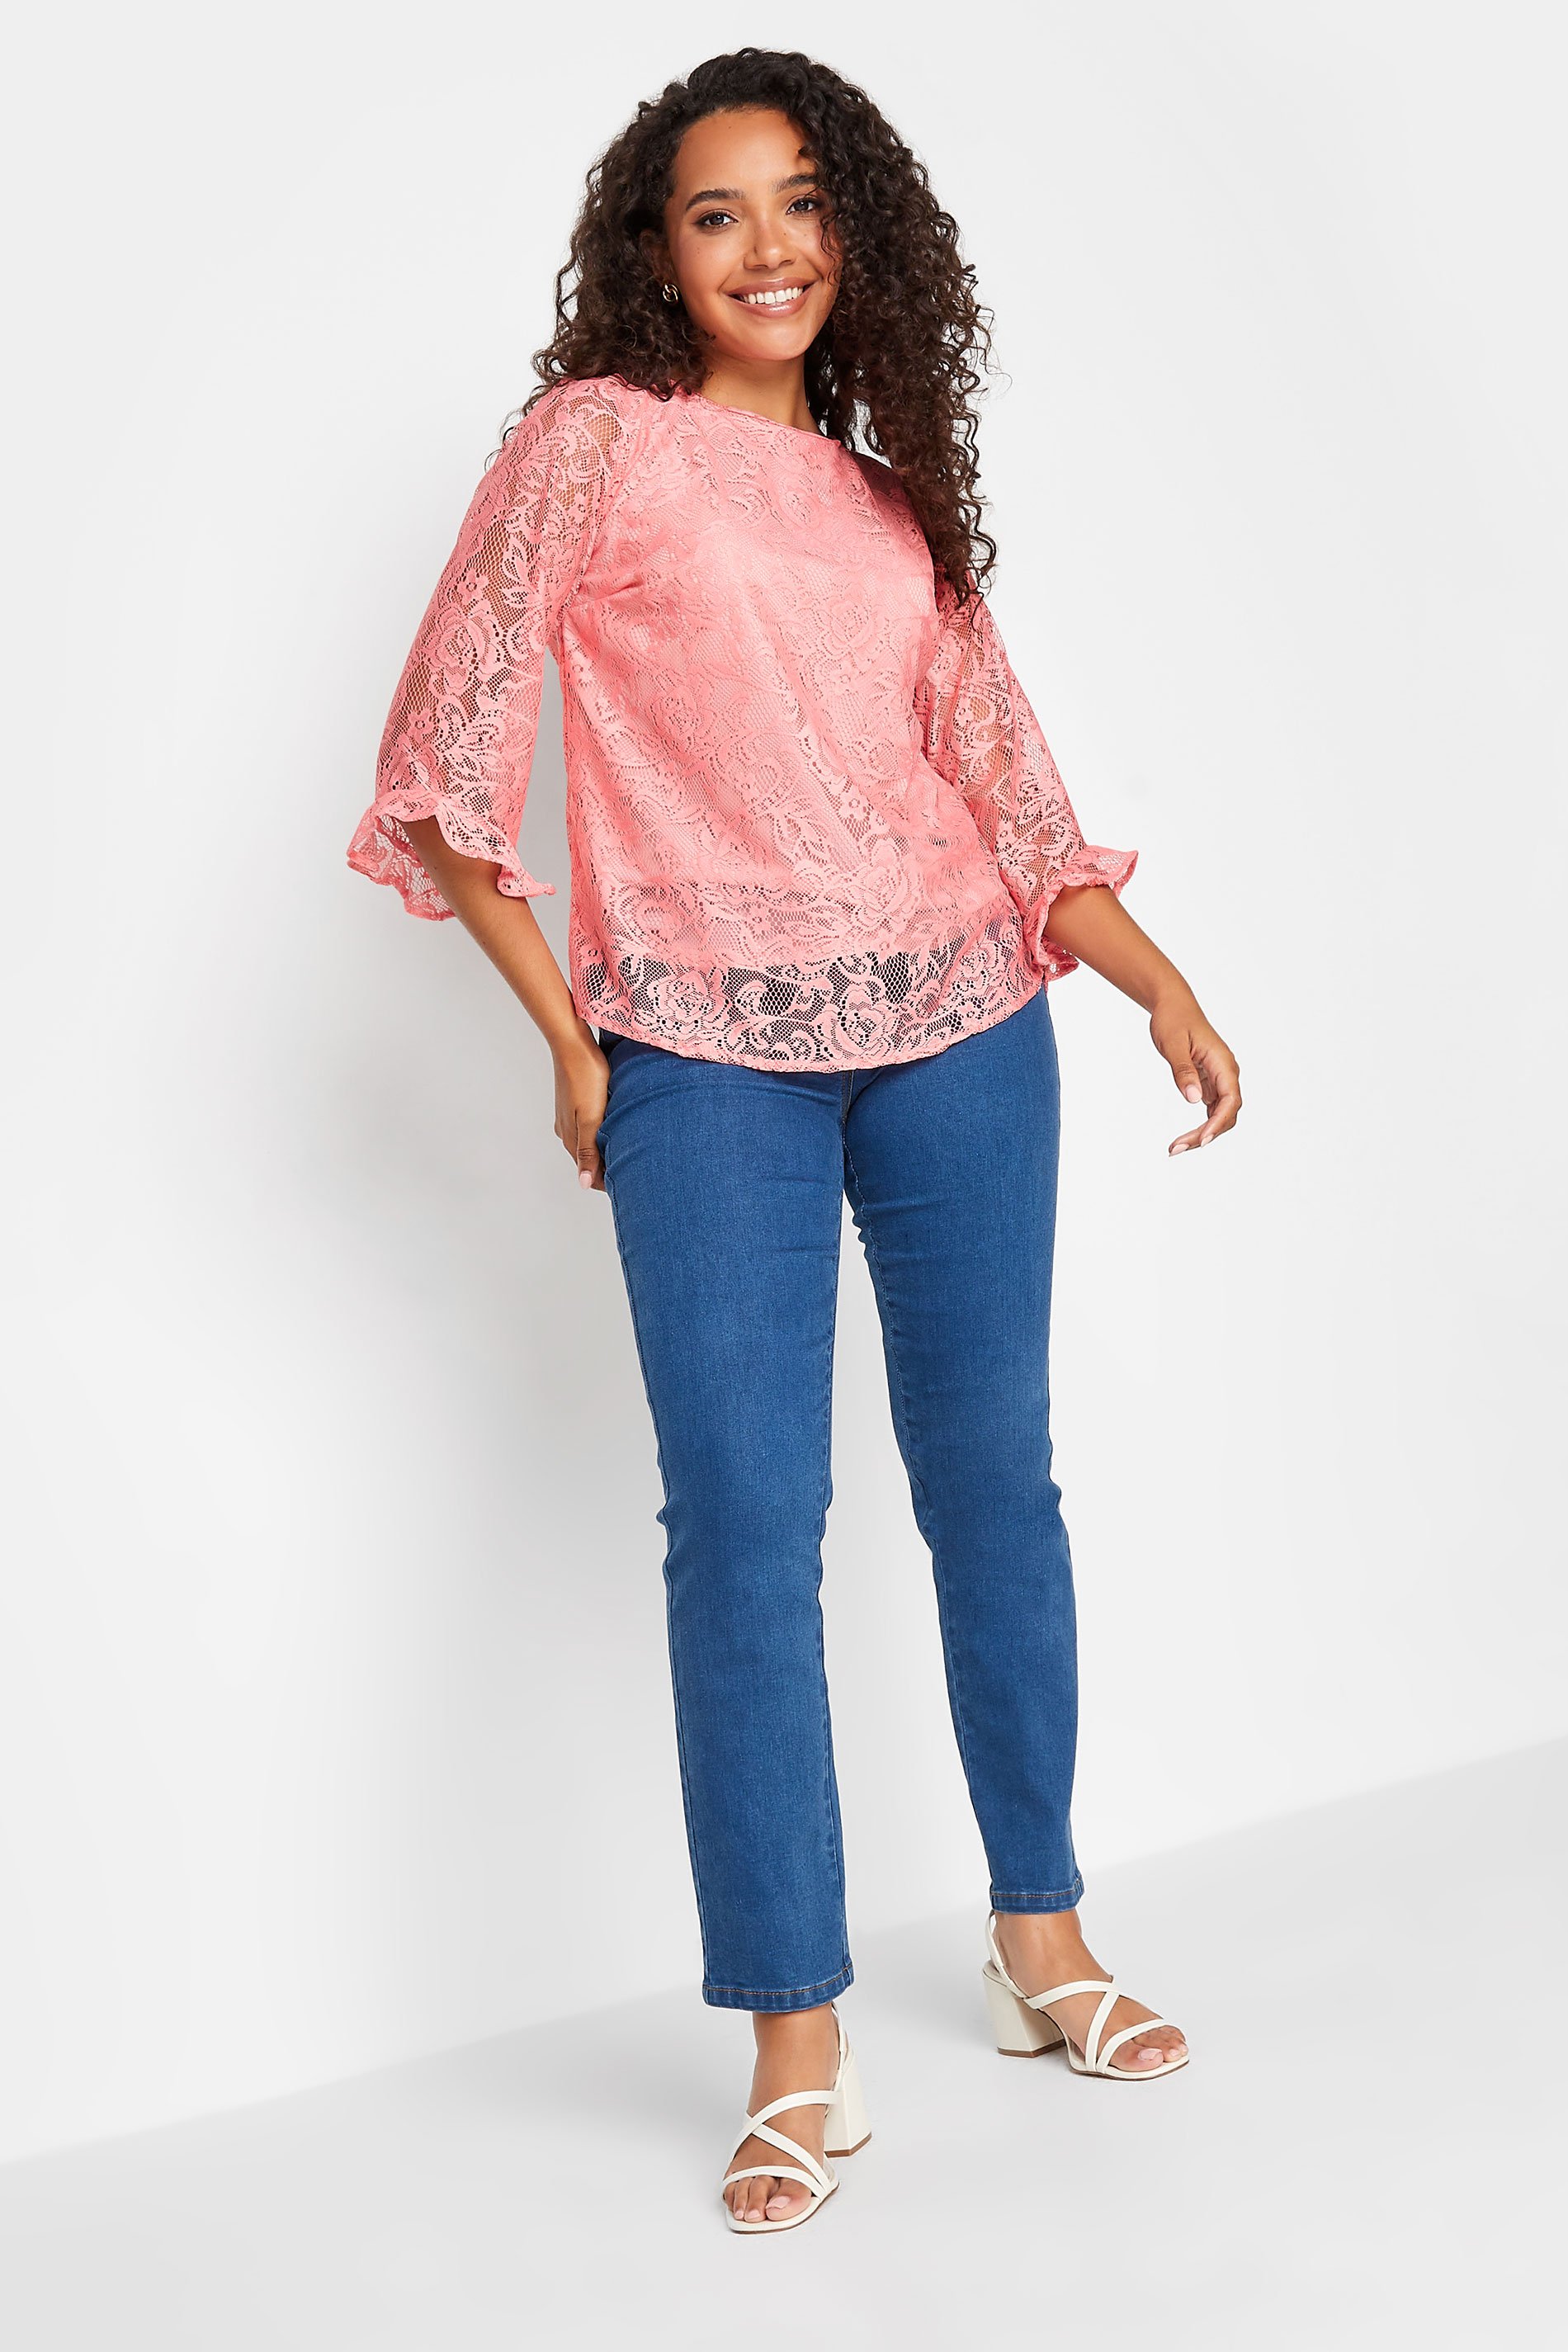 M&Co Light Pink Floral Lace Long Sleeve Blouse | M&Co 2